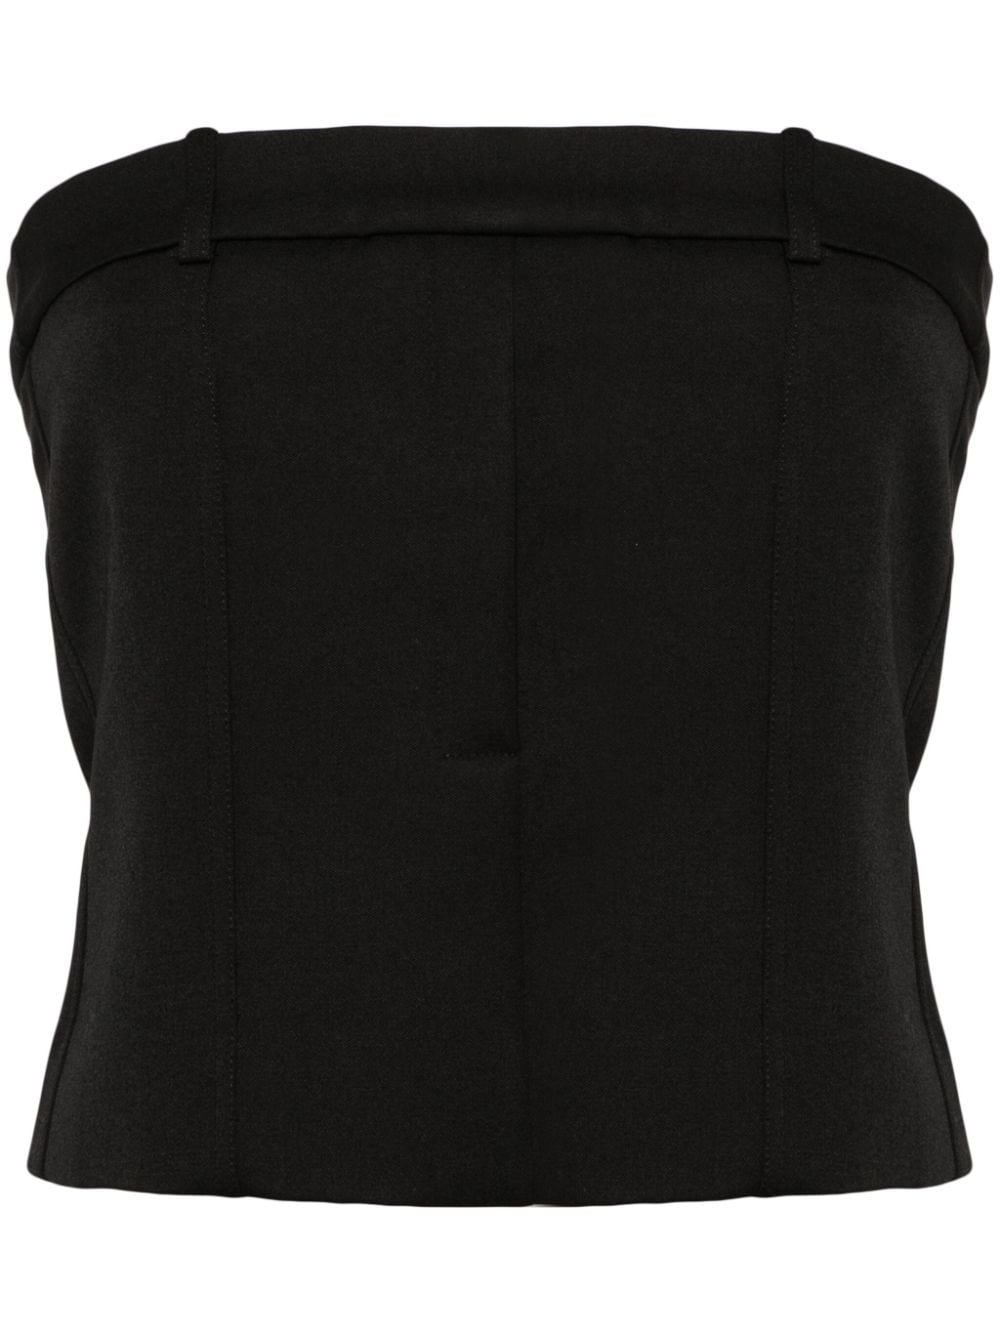 Róhe tailored corset top - Black von Róhe